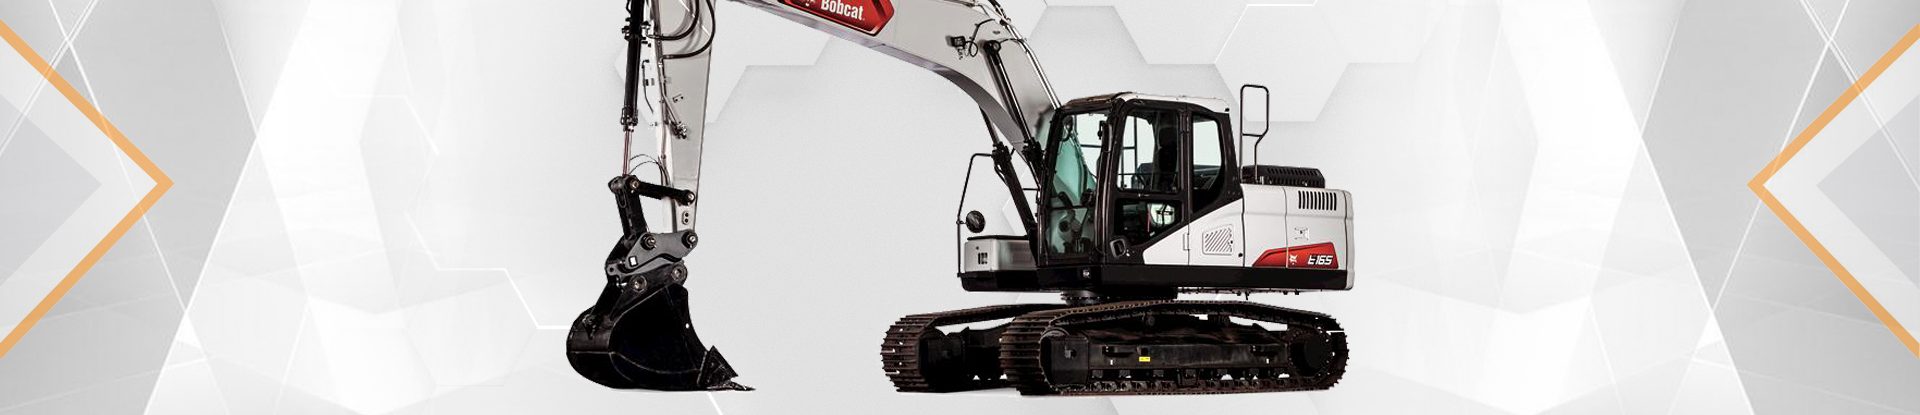 Bobcat’s first medium size excavator model E165